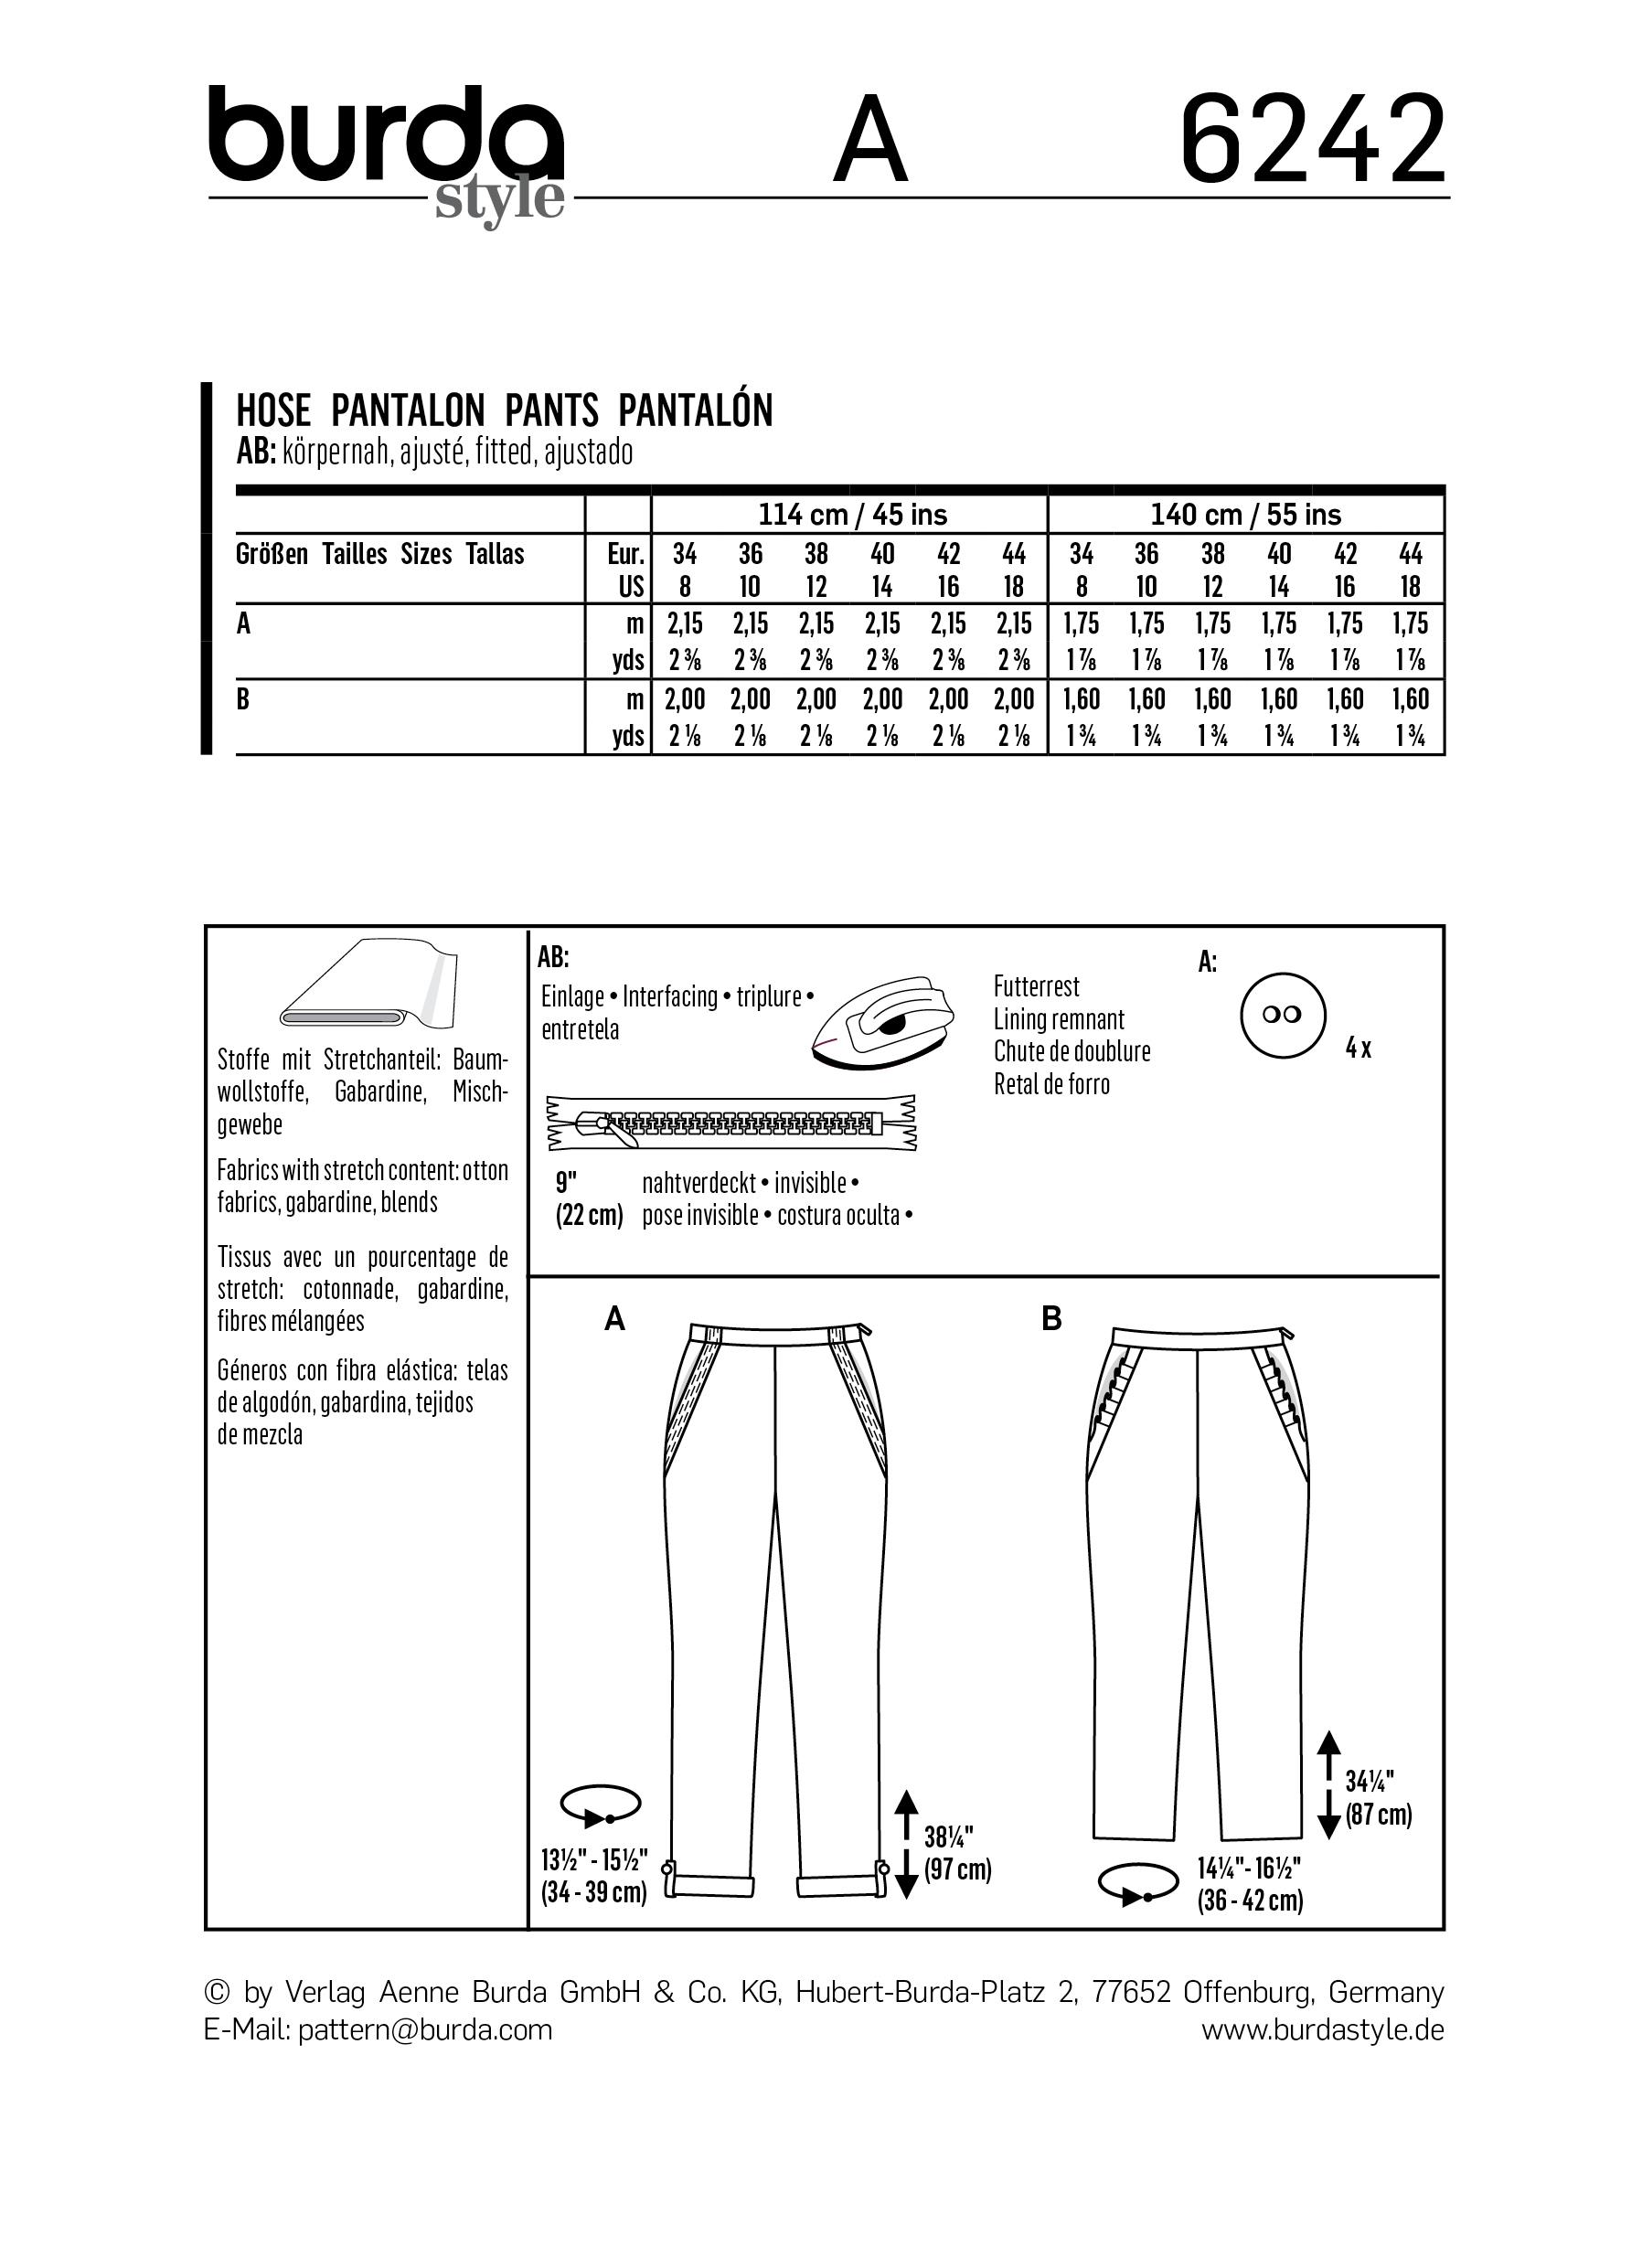 Burda B6242 Trousers/Pants with Side Zip Fastening Sewing Pattern